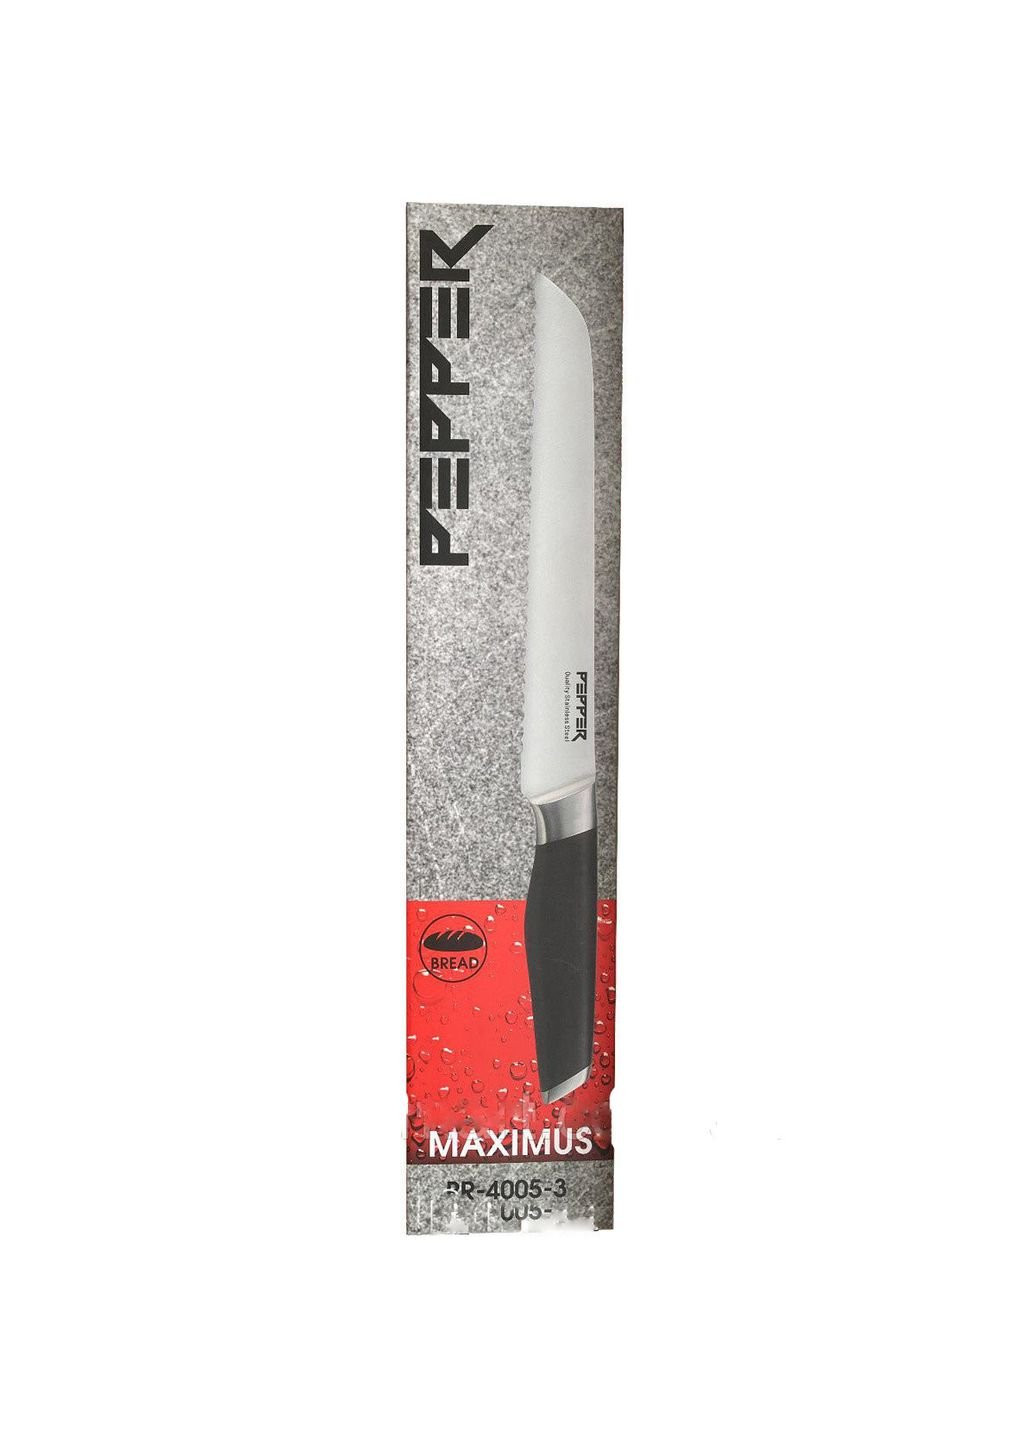 Нож для хлеба Maximus PR-4005-3 20.3 см Pepper (253612372)